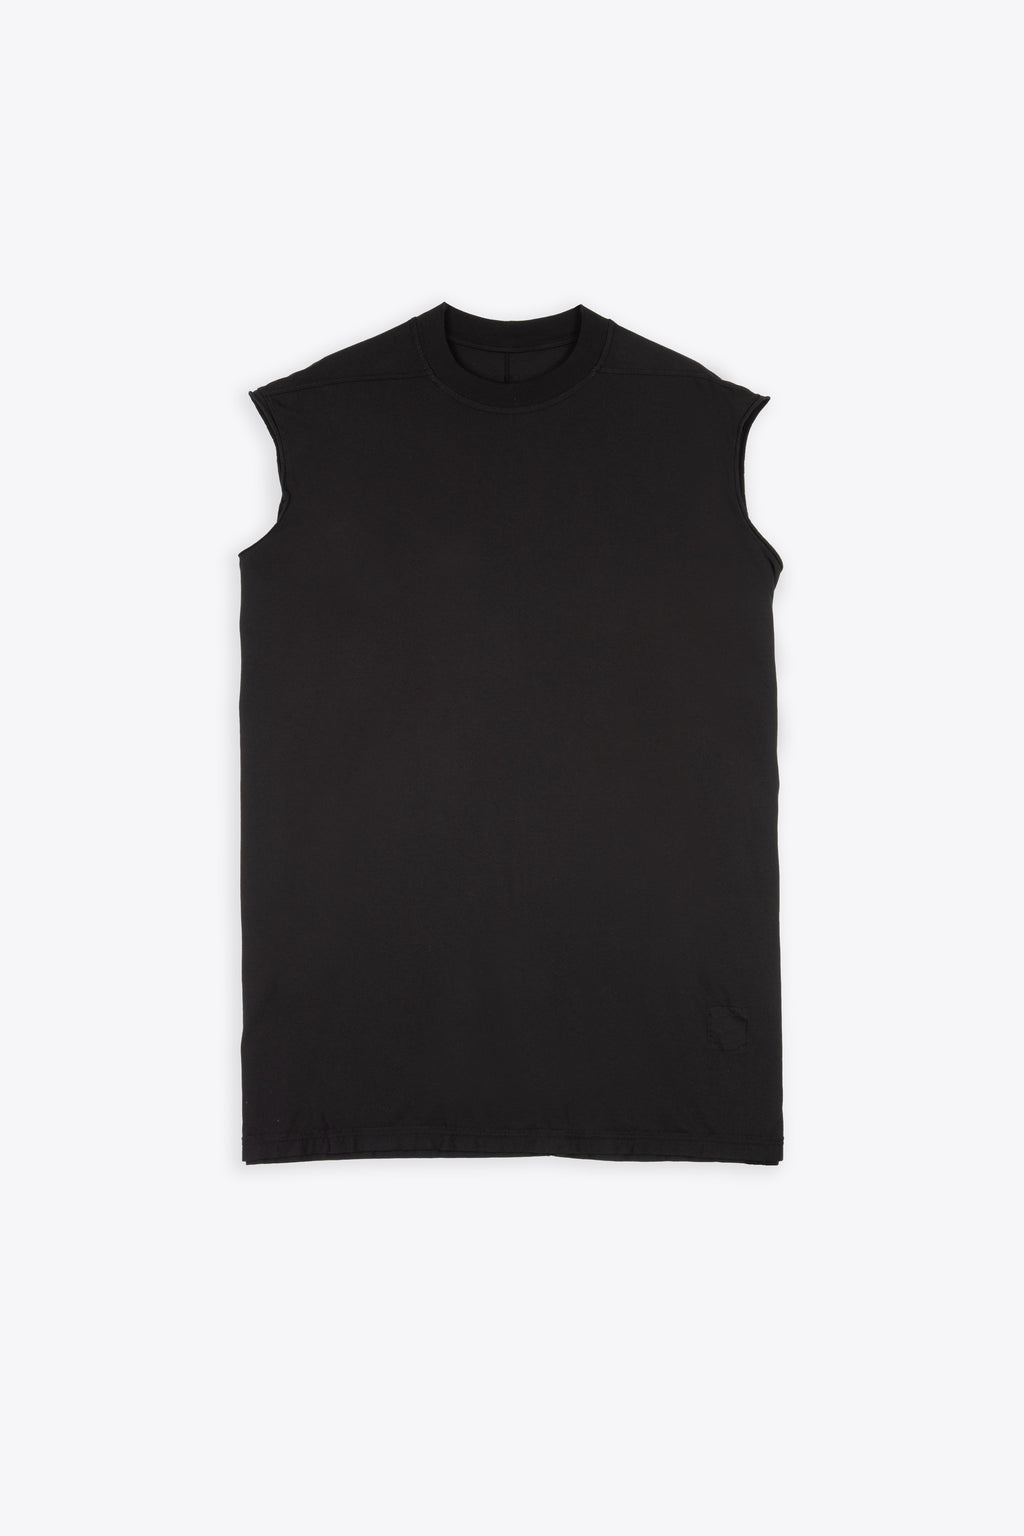 alt-image__Black-cotton-oversized-sleveless-t-shirt---Tarp-T